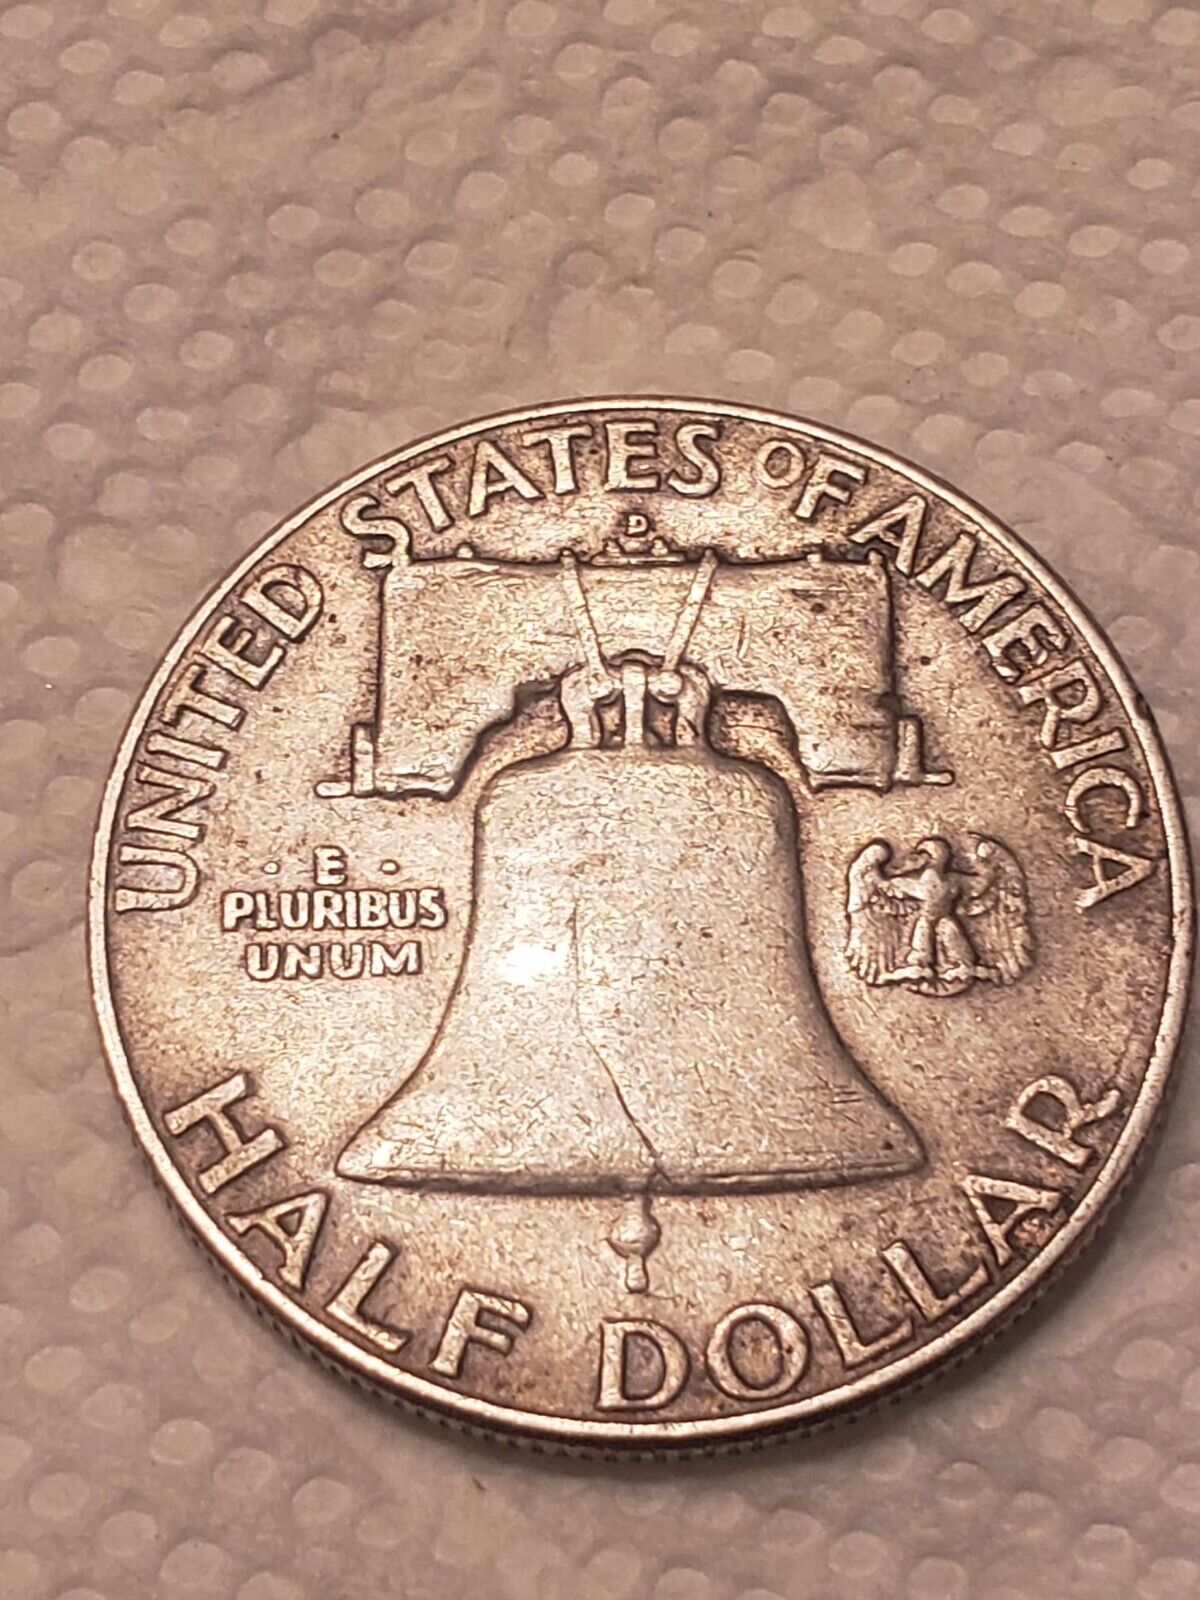 USA Silver Half Dollar Franklin 1962D in a good condition .(CB9a4)